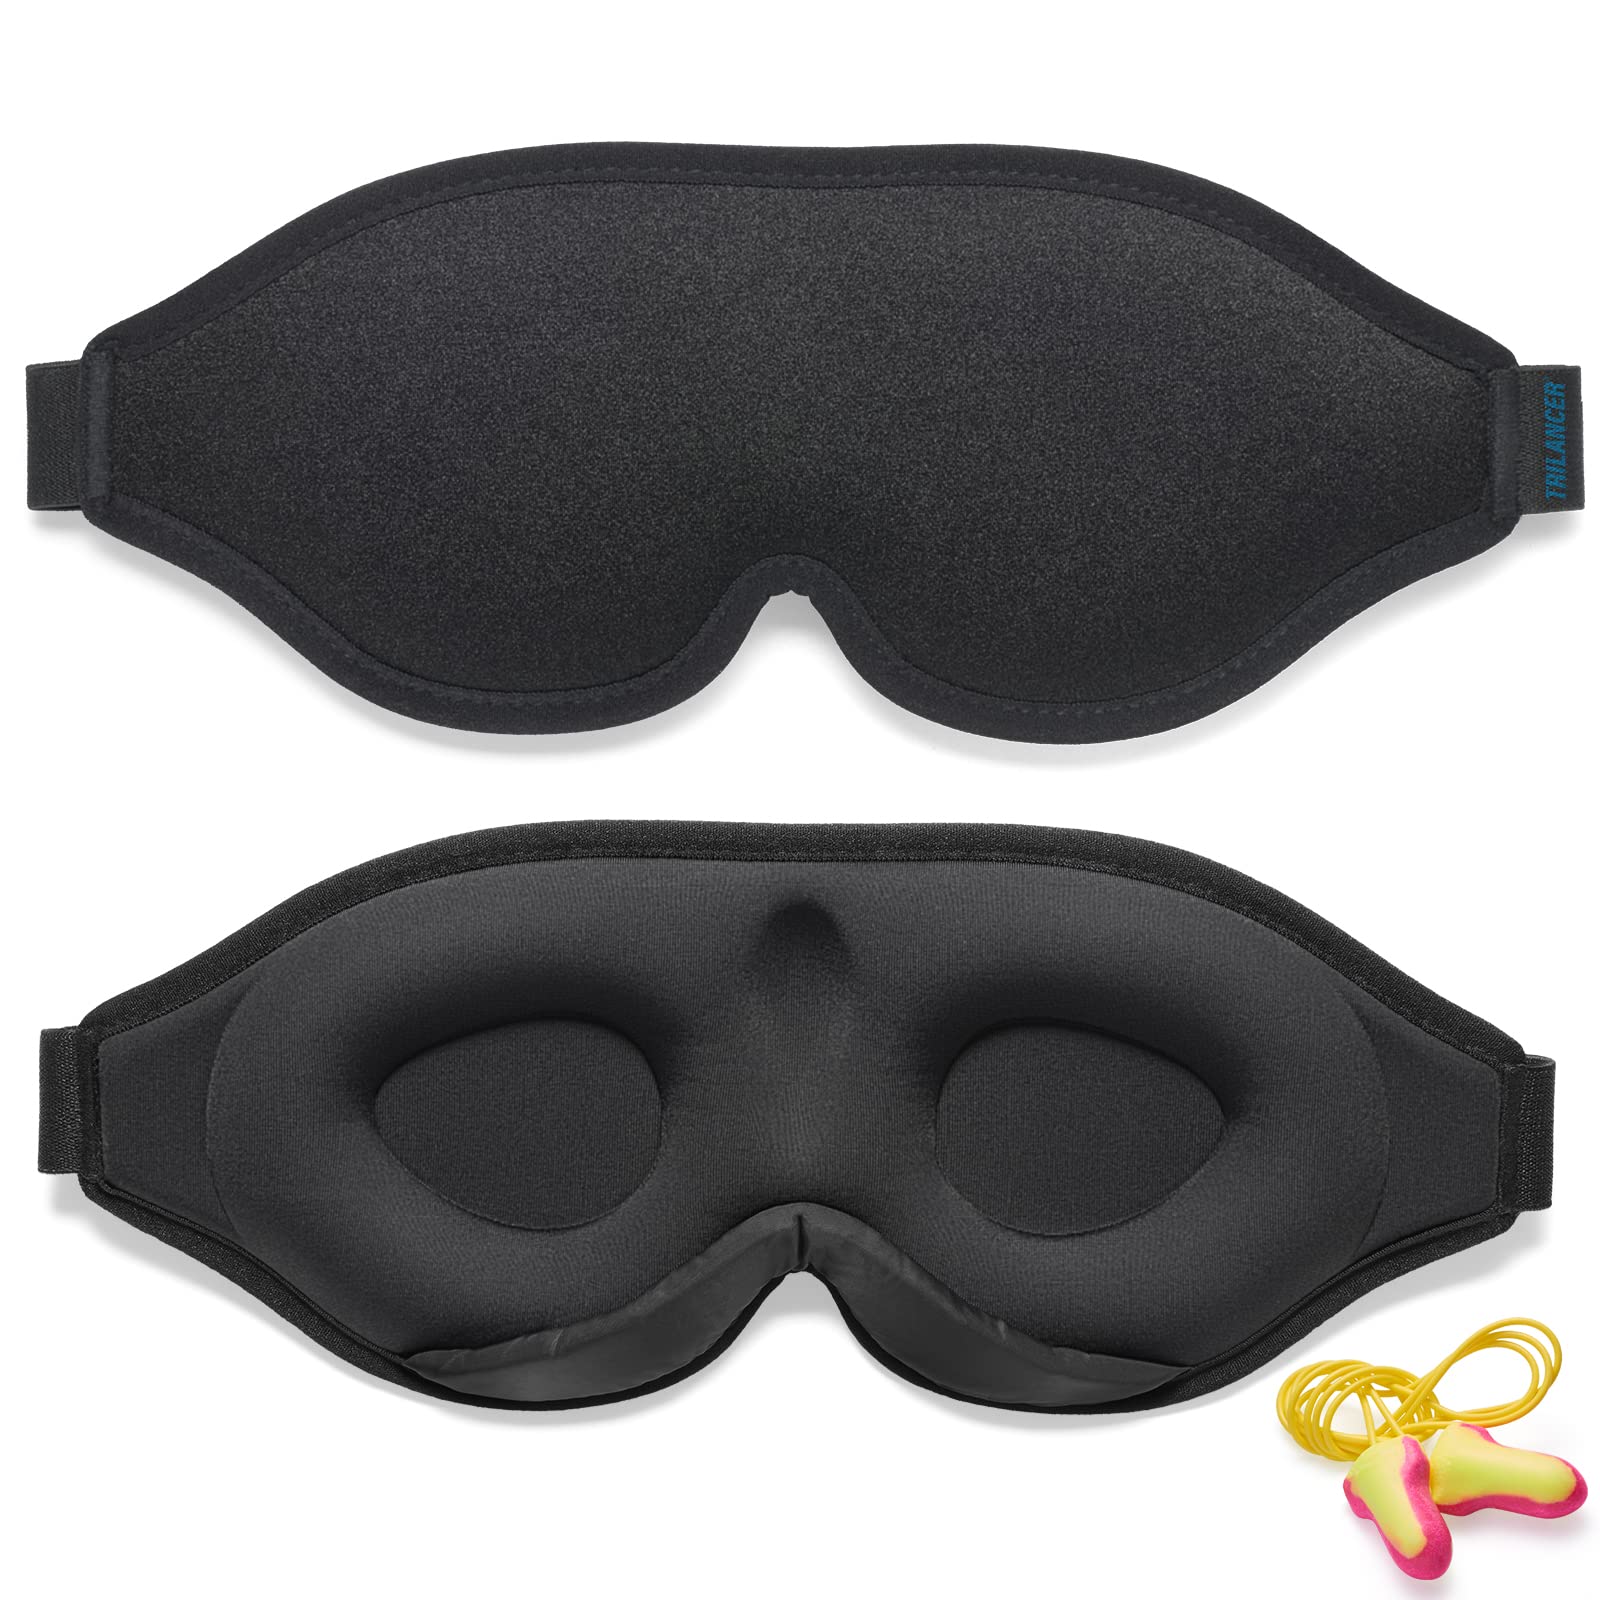 MZOO Sleep Eye Mask for Men Women, Zero Eye Pressure 3D Sleeping Mask, 100%  Light Blocking Patented Design Night Blindfold, Soft Eye Shade Cover for